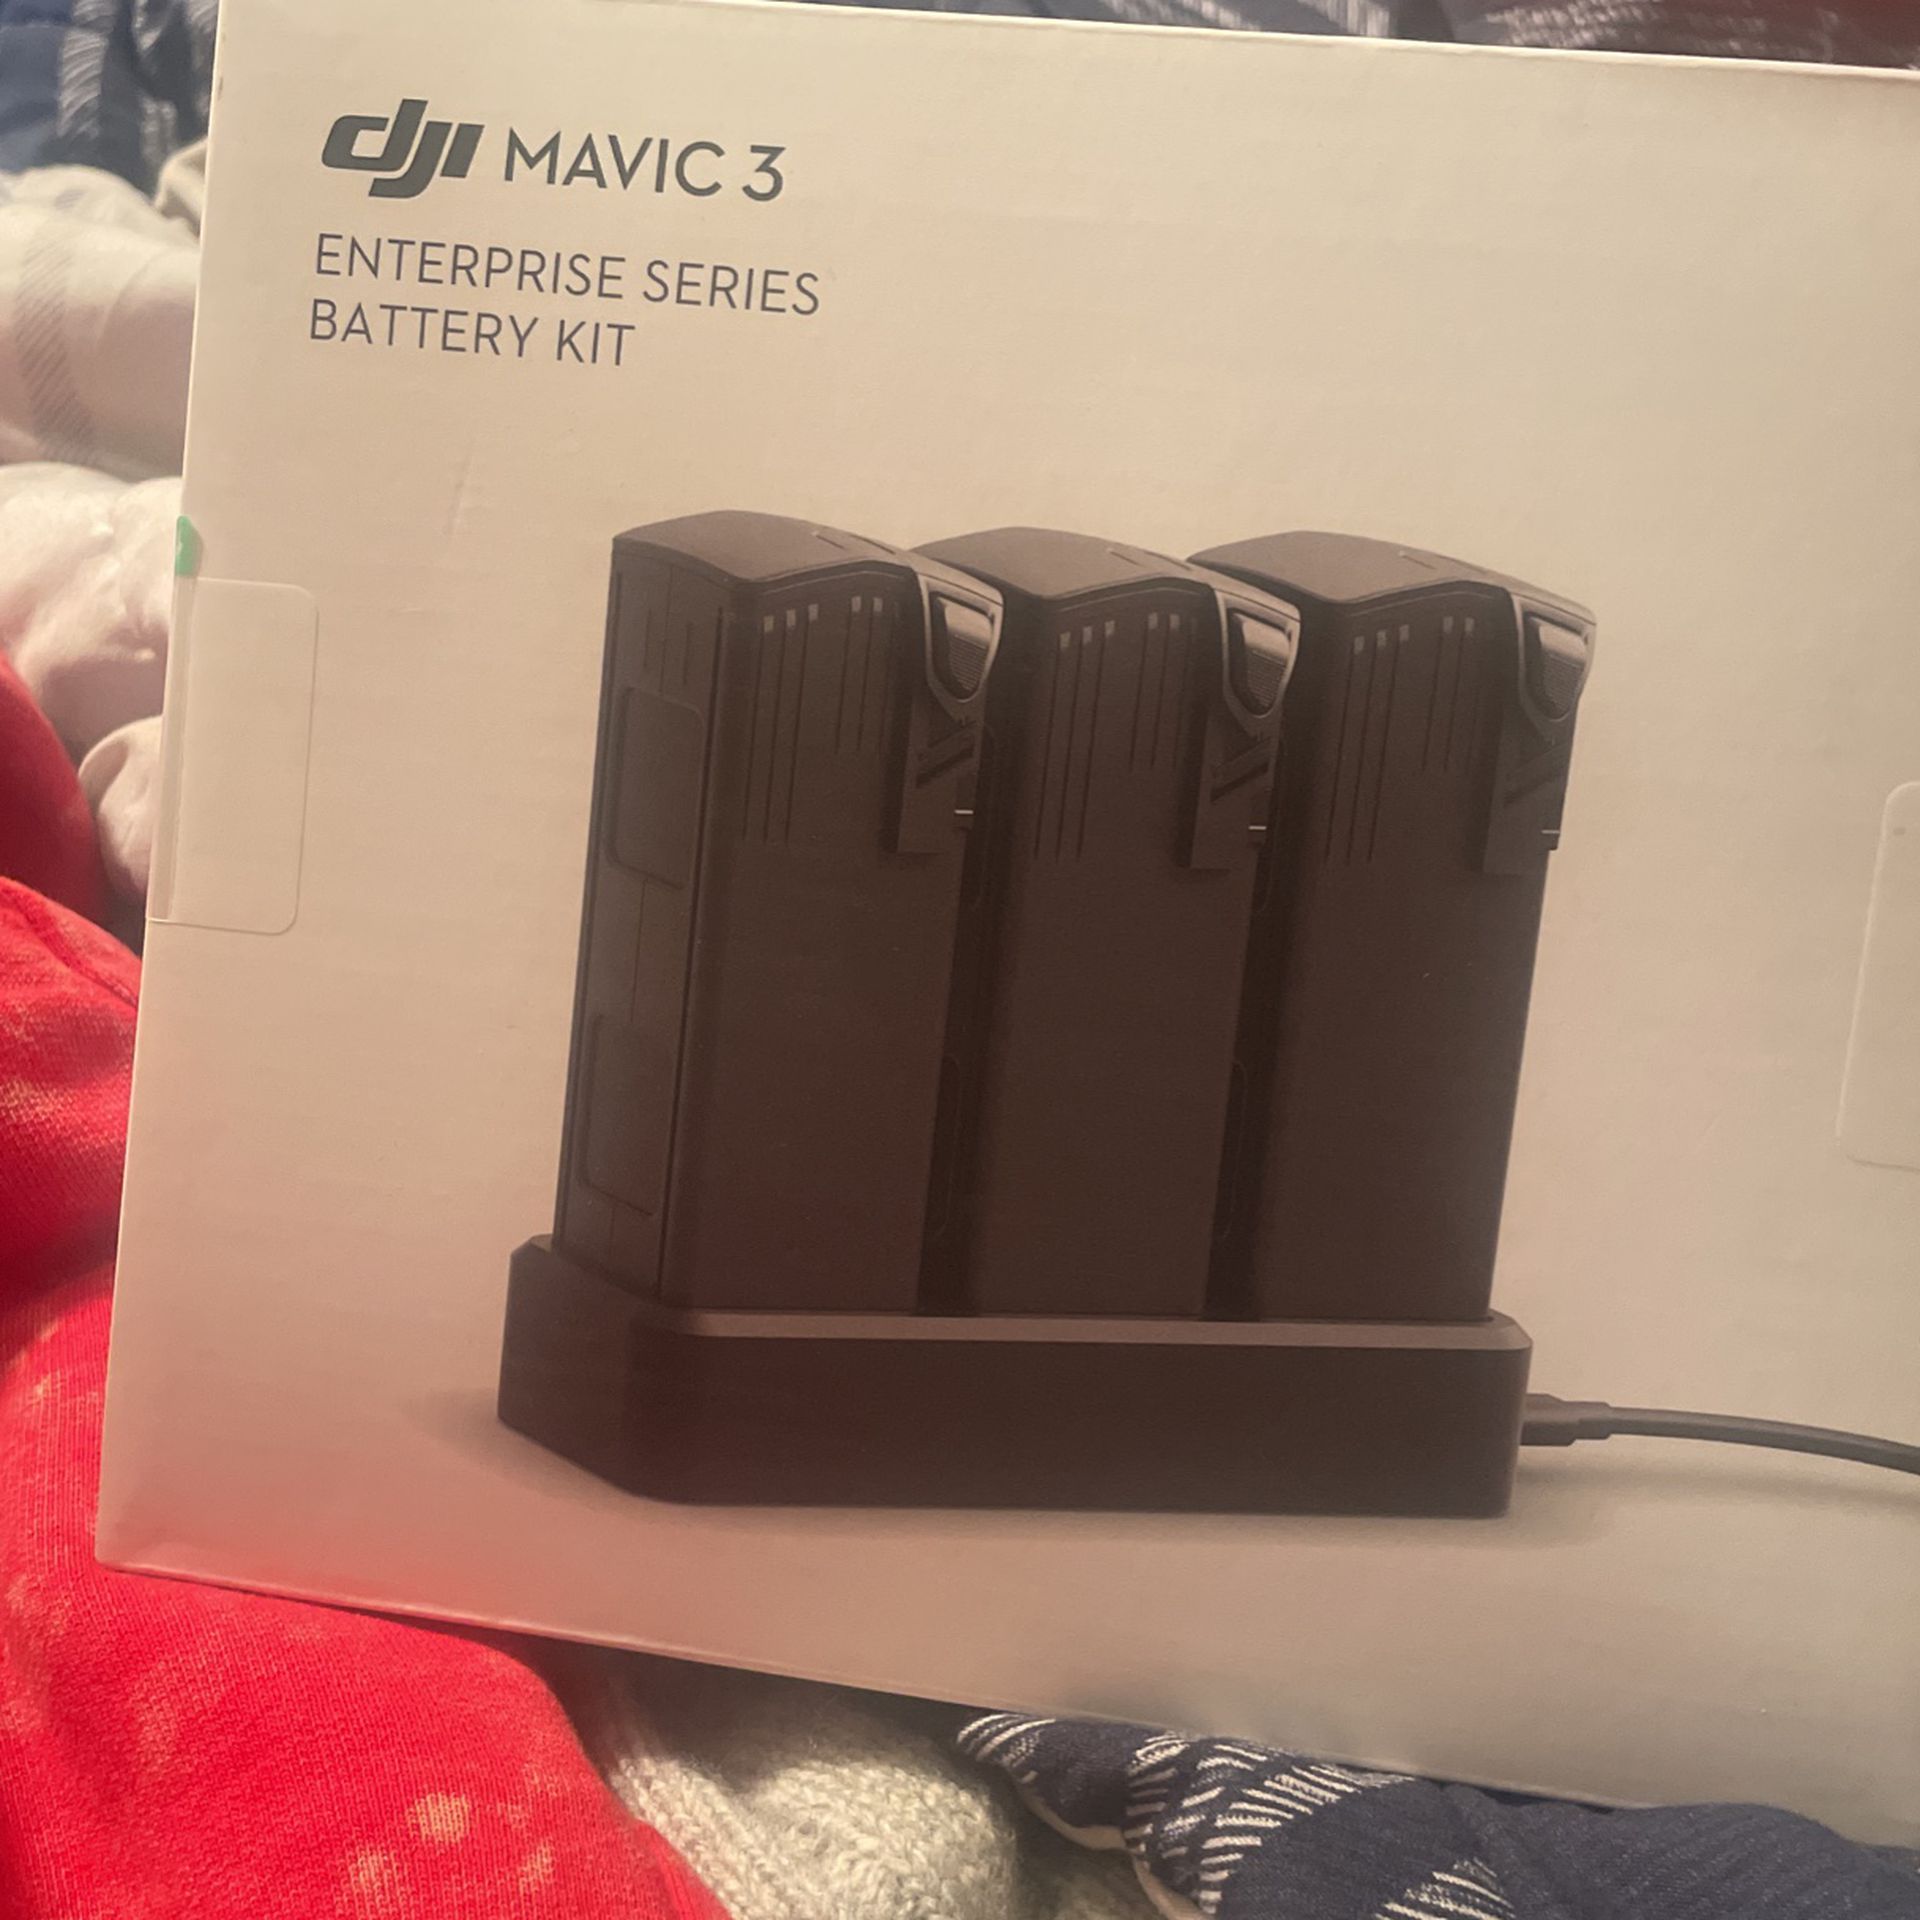 Dji Magic 3 Enterprise Series Battery Kit